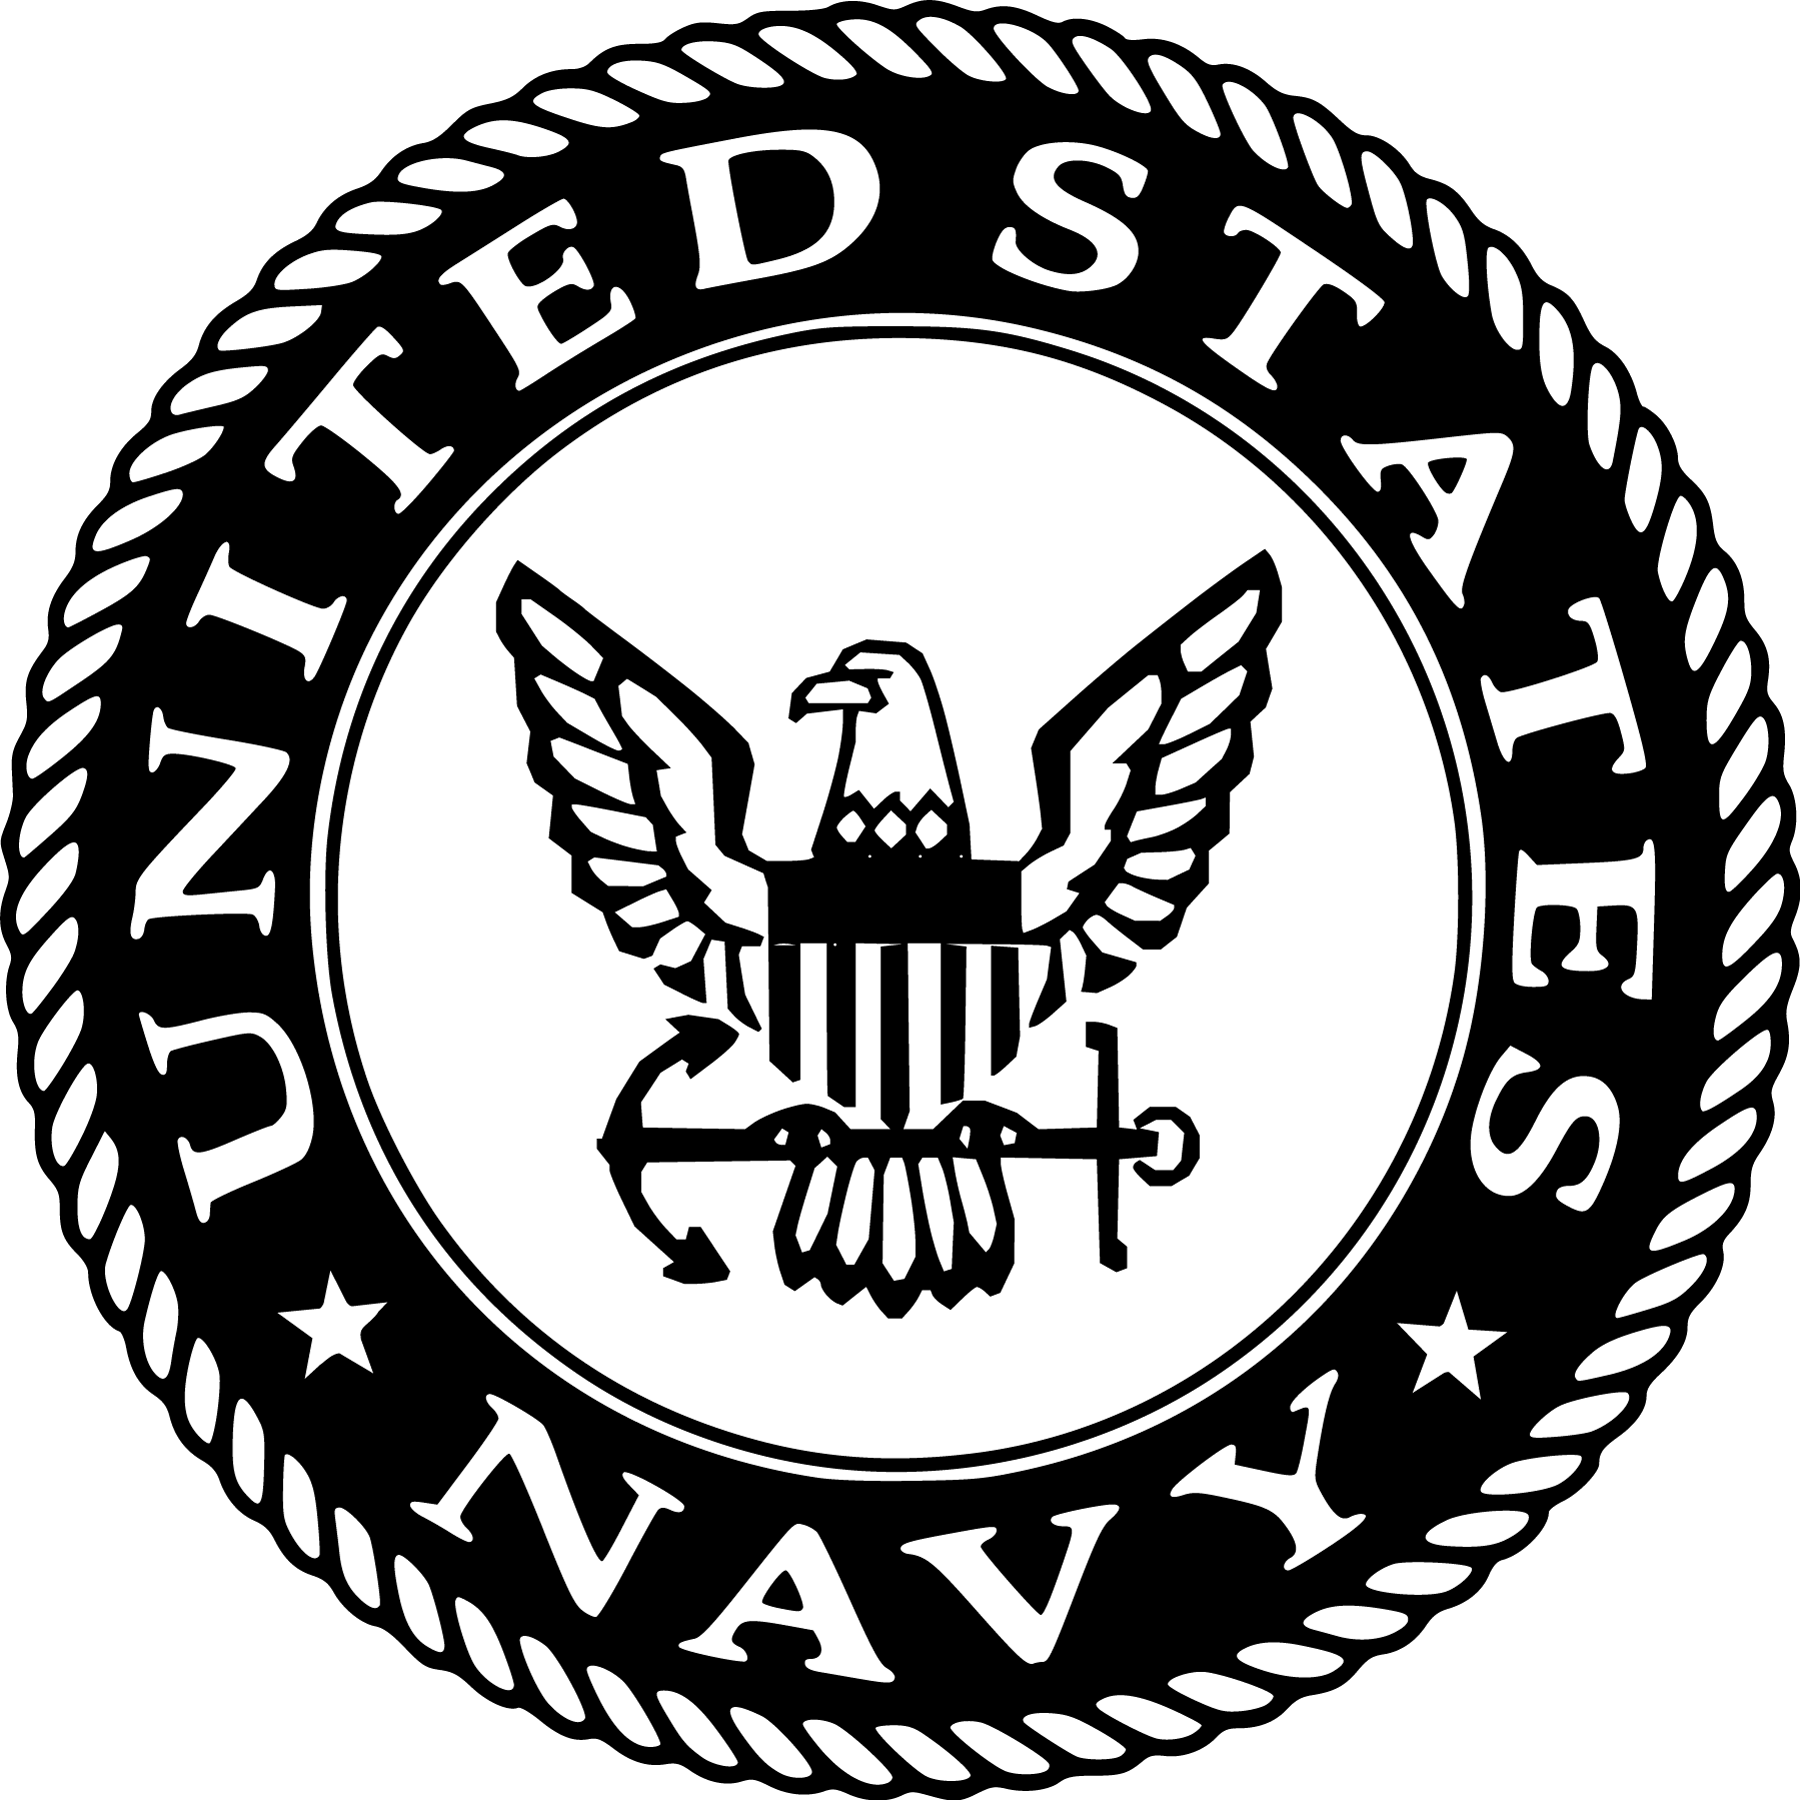 Black and White Vector Logo - Military Logos Vector - Army, Navy, Air Force, Marines, Coast Guard